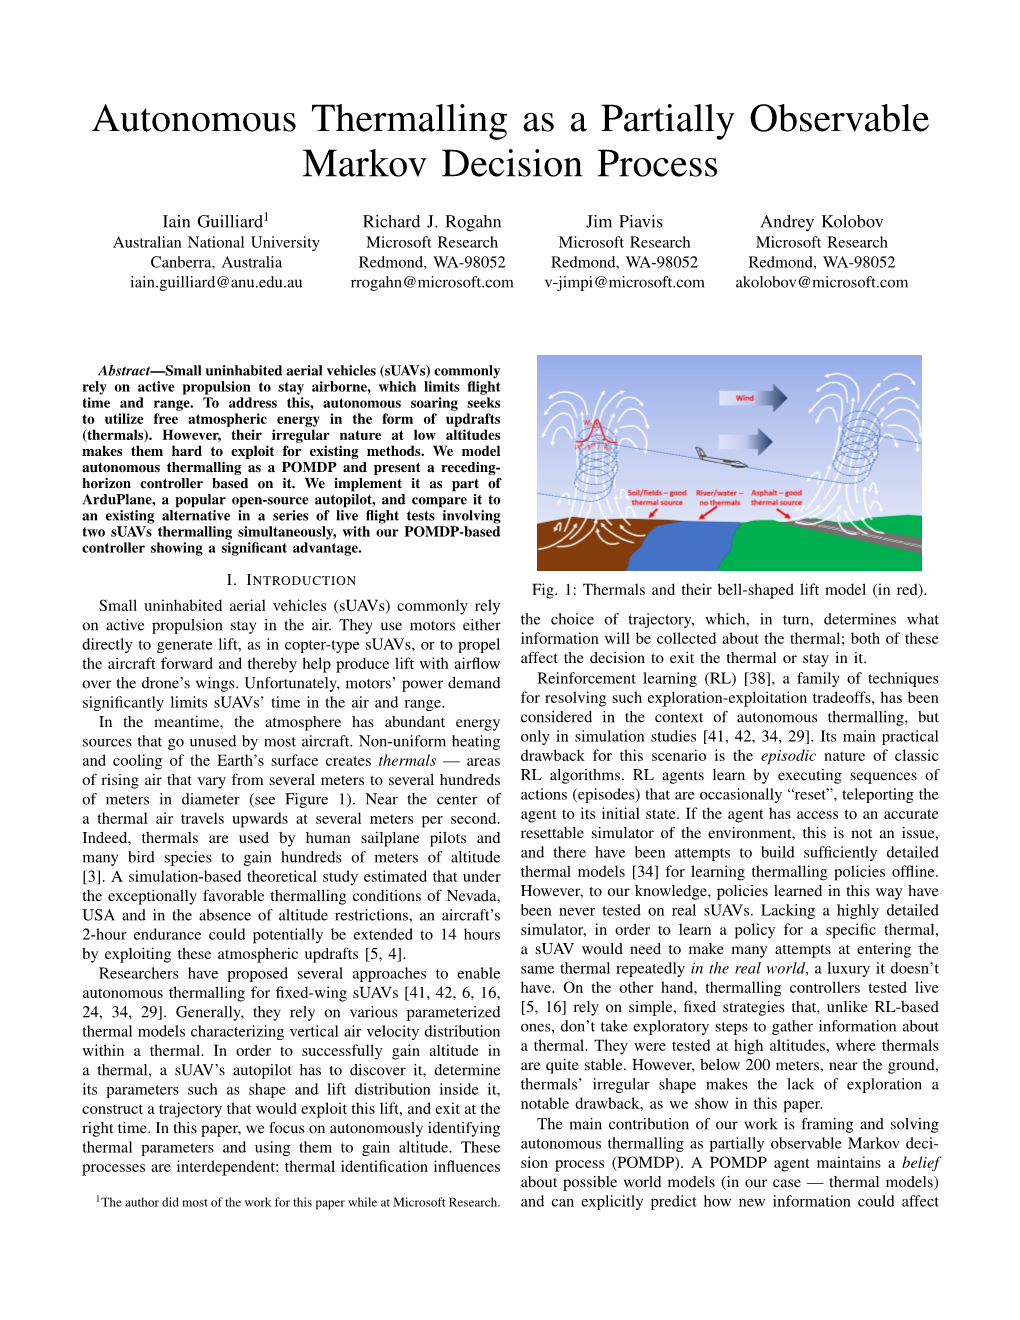 Autonomous Thermalling As a Partially Observable Markov Decision Process